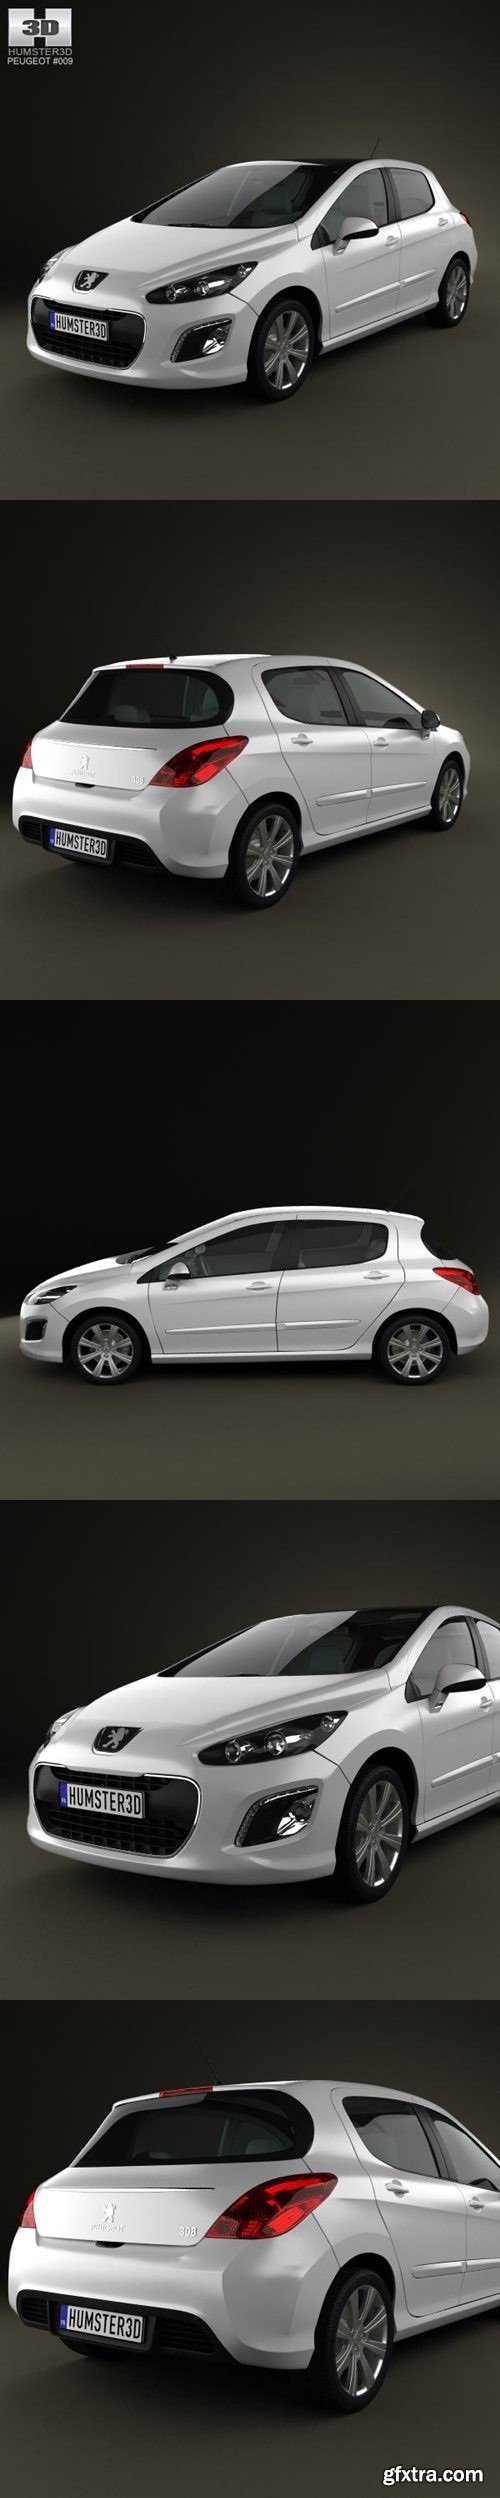 Peugeot 308 2012 3D Model